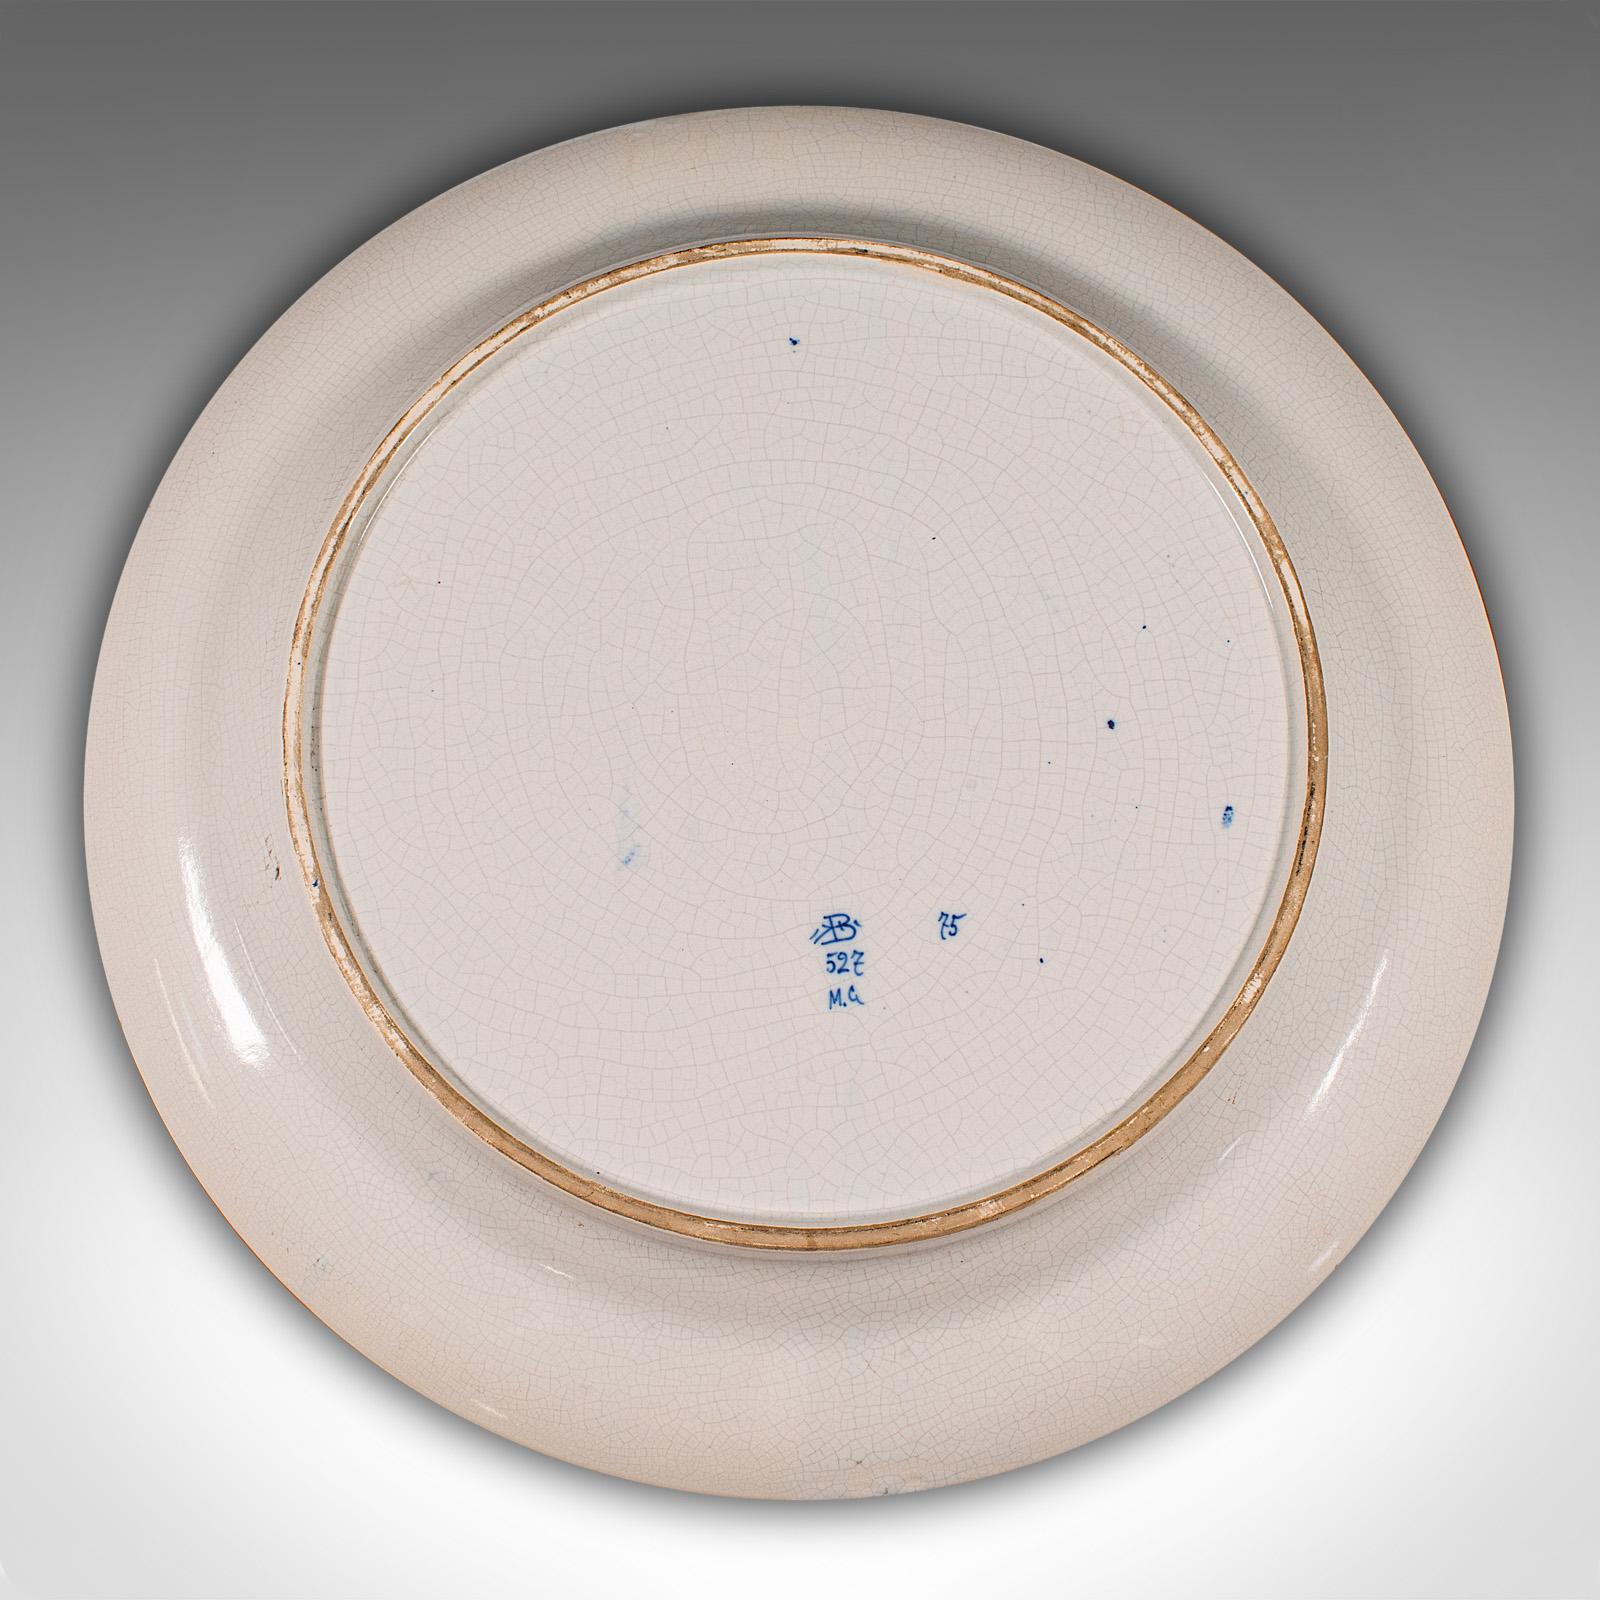 Large Antique Serving Plate, Belgian, Ceramic Charger, Decorative, Circa 1920 For Sale 4